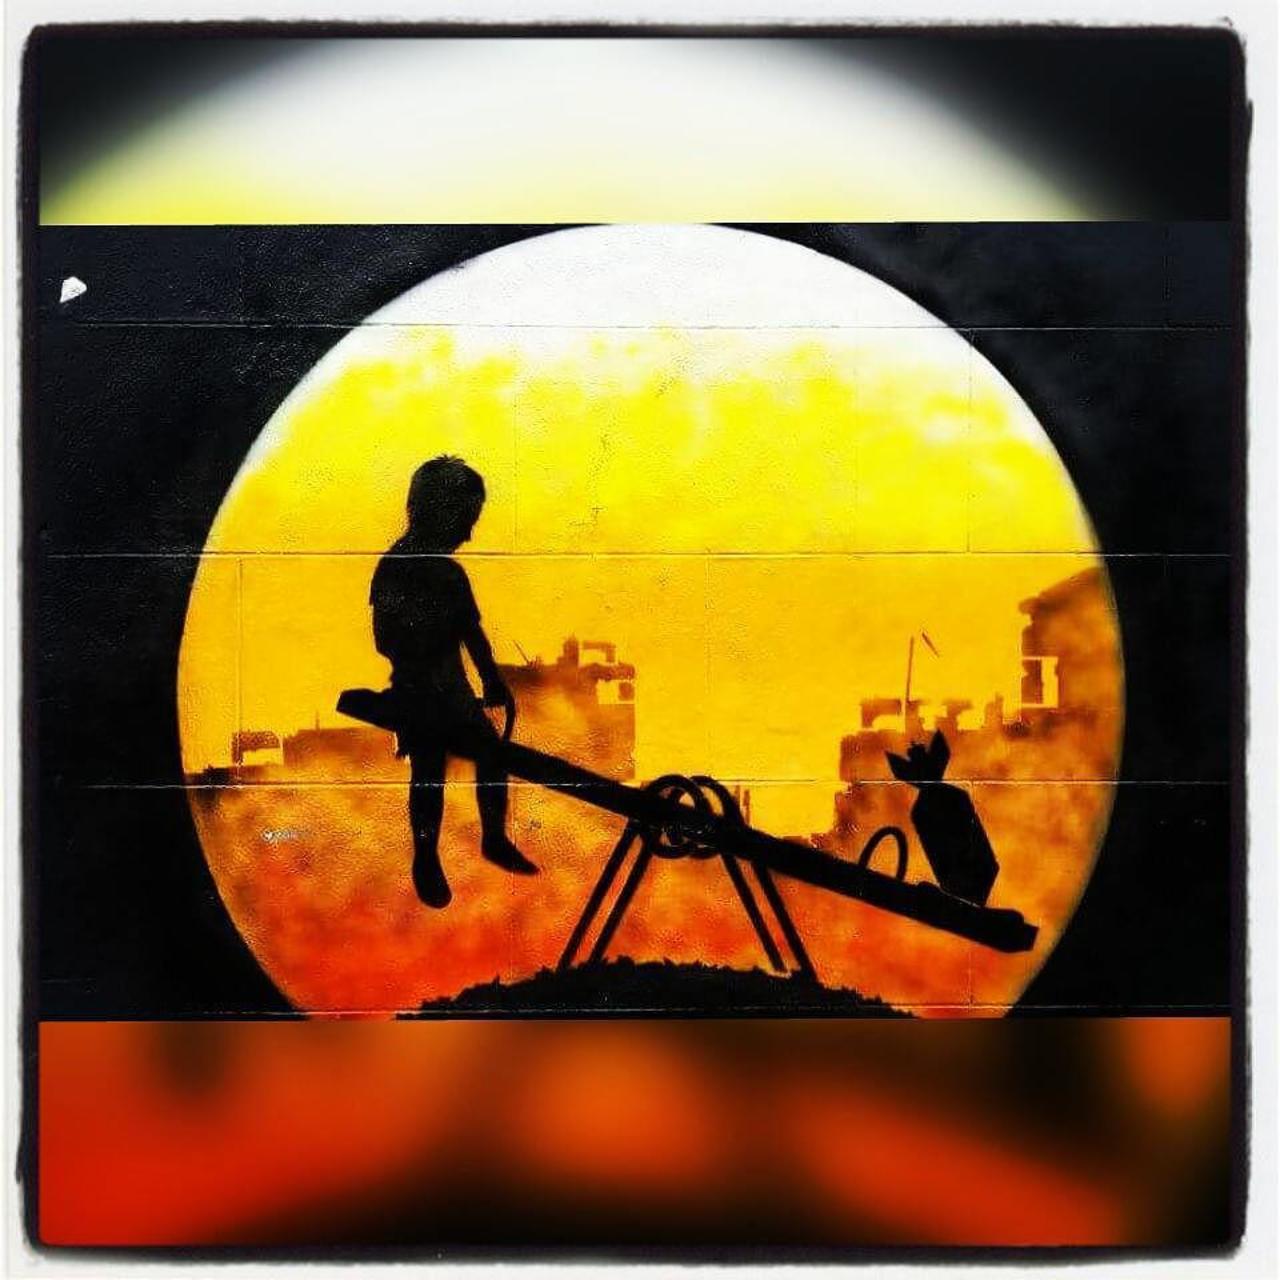 #streetart #london #ottoschade #war #bomb #kids #england #londonstreetart #street #art #streetartlondon #graffiti #… http://t.co/Jjwtw6Kfy3